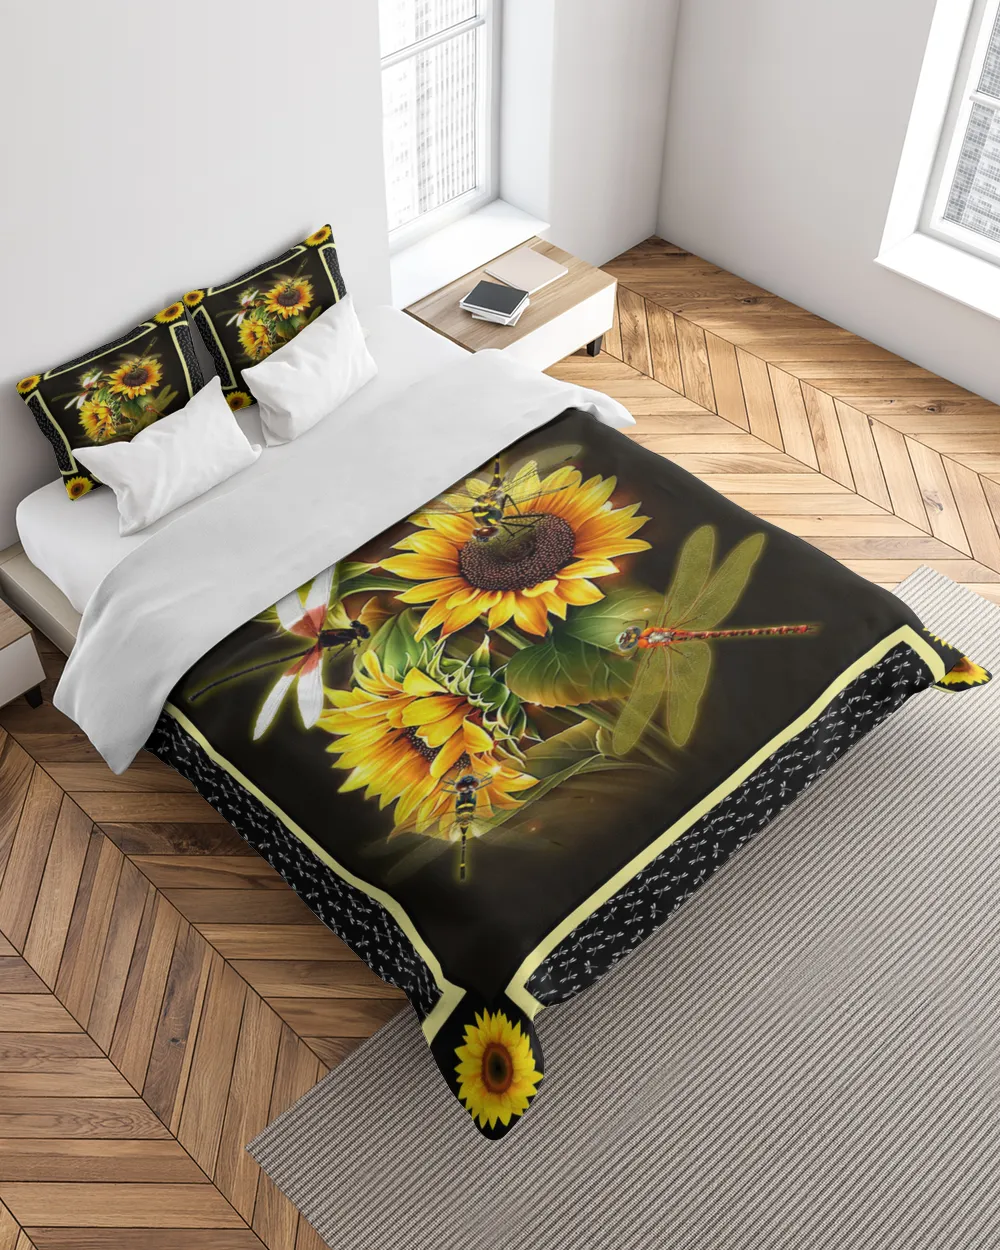 Dragonfly sunflower pattern VT